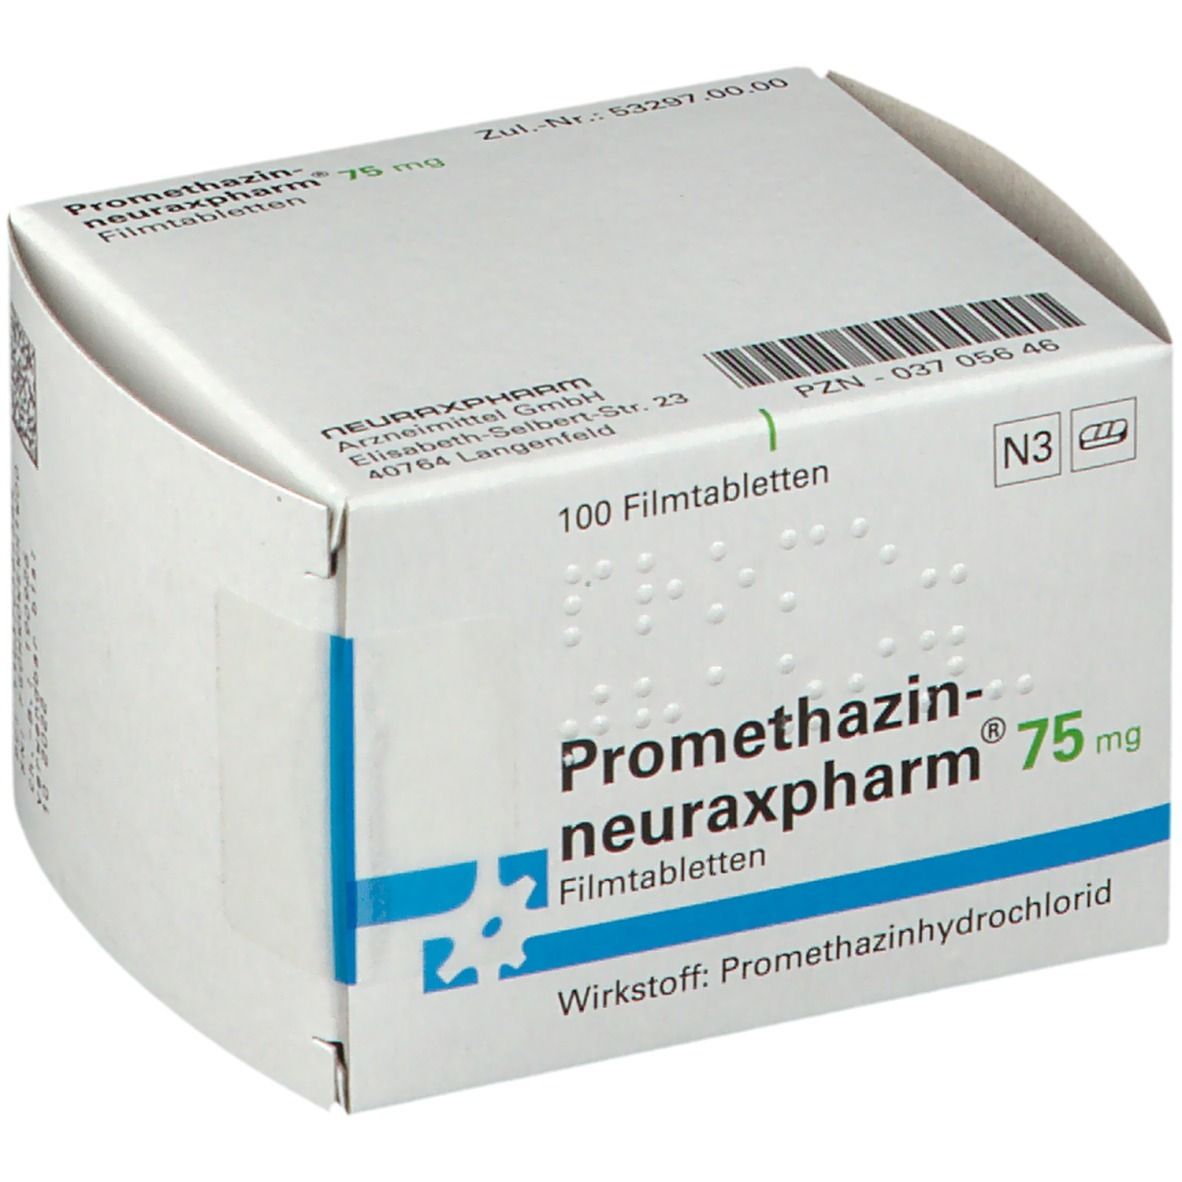 Promethazin-neuraxpharm® 75 mg